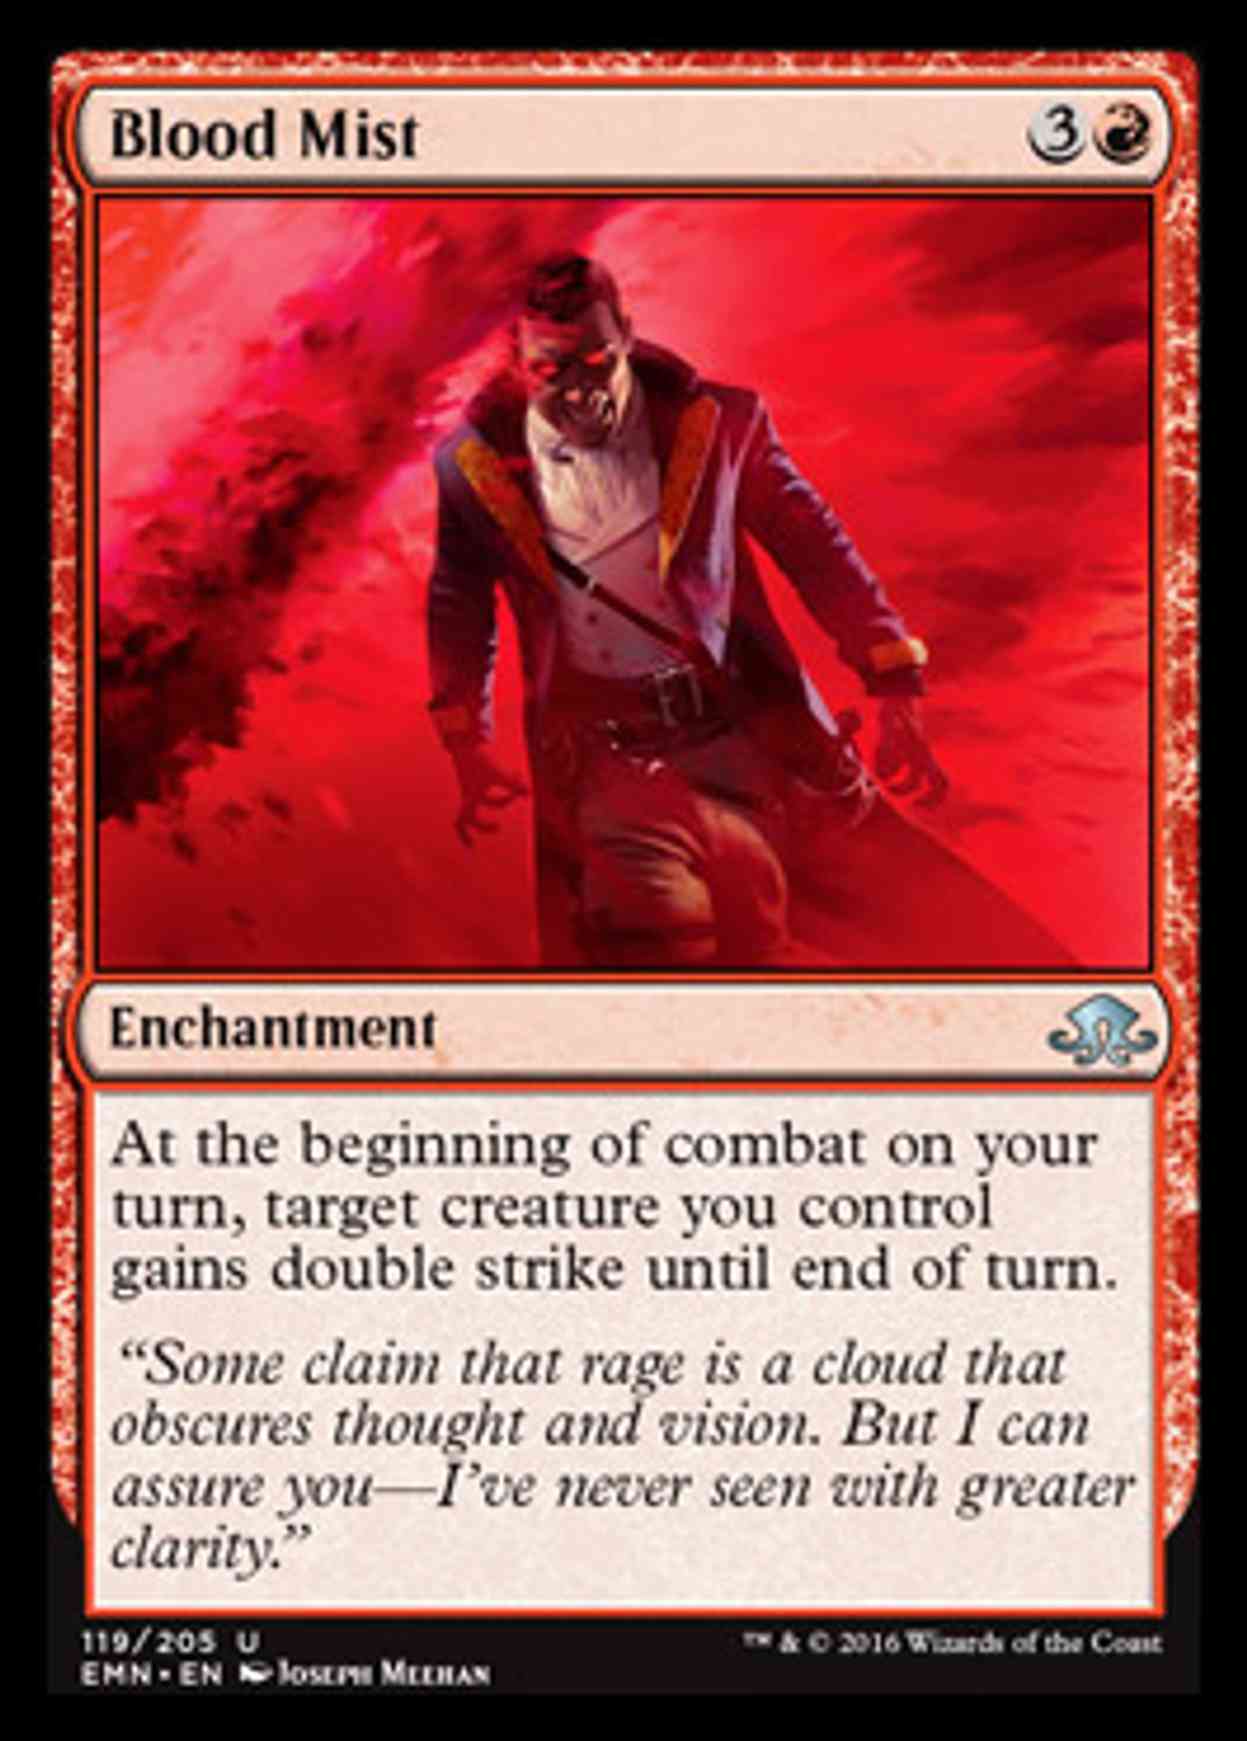 Blood Mist magic card front